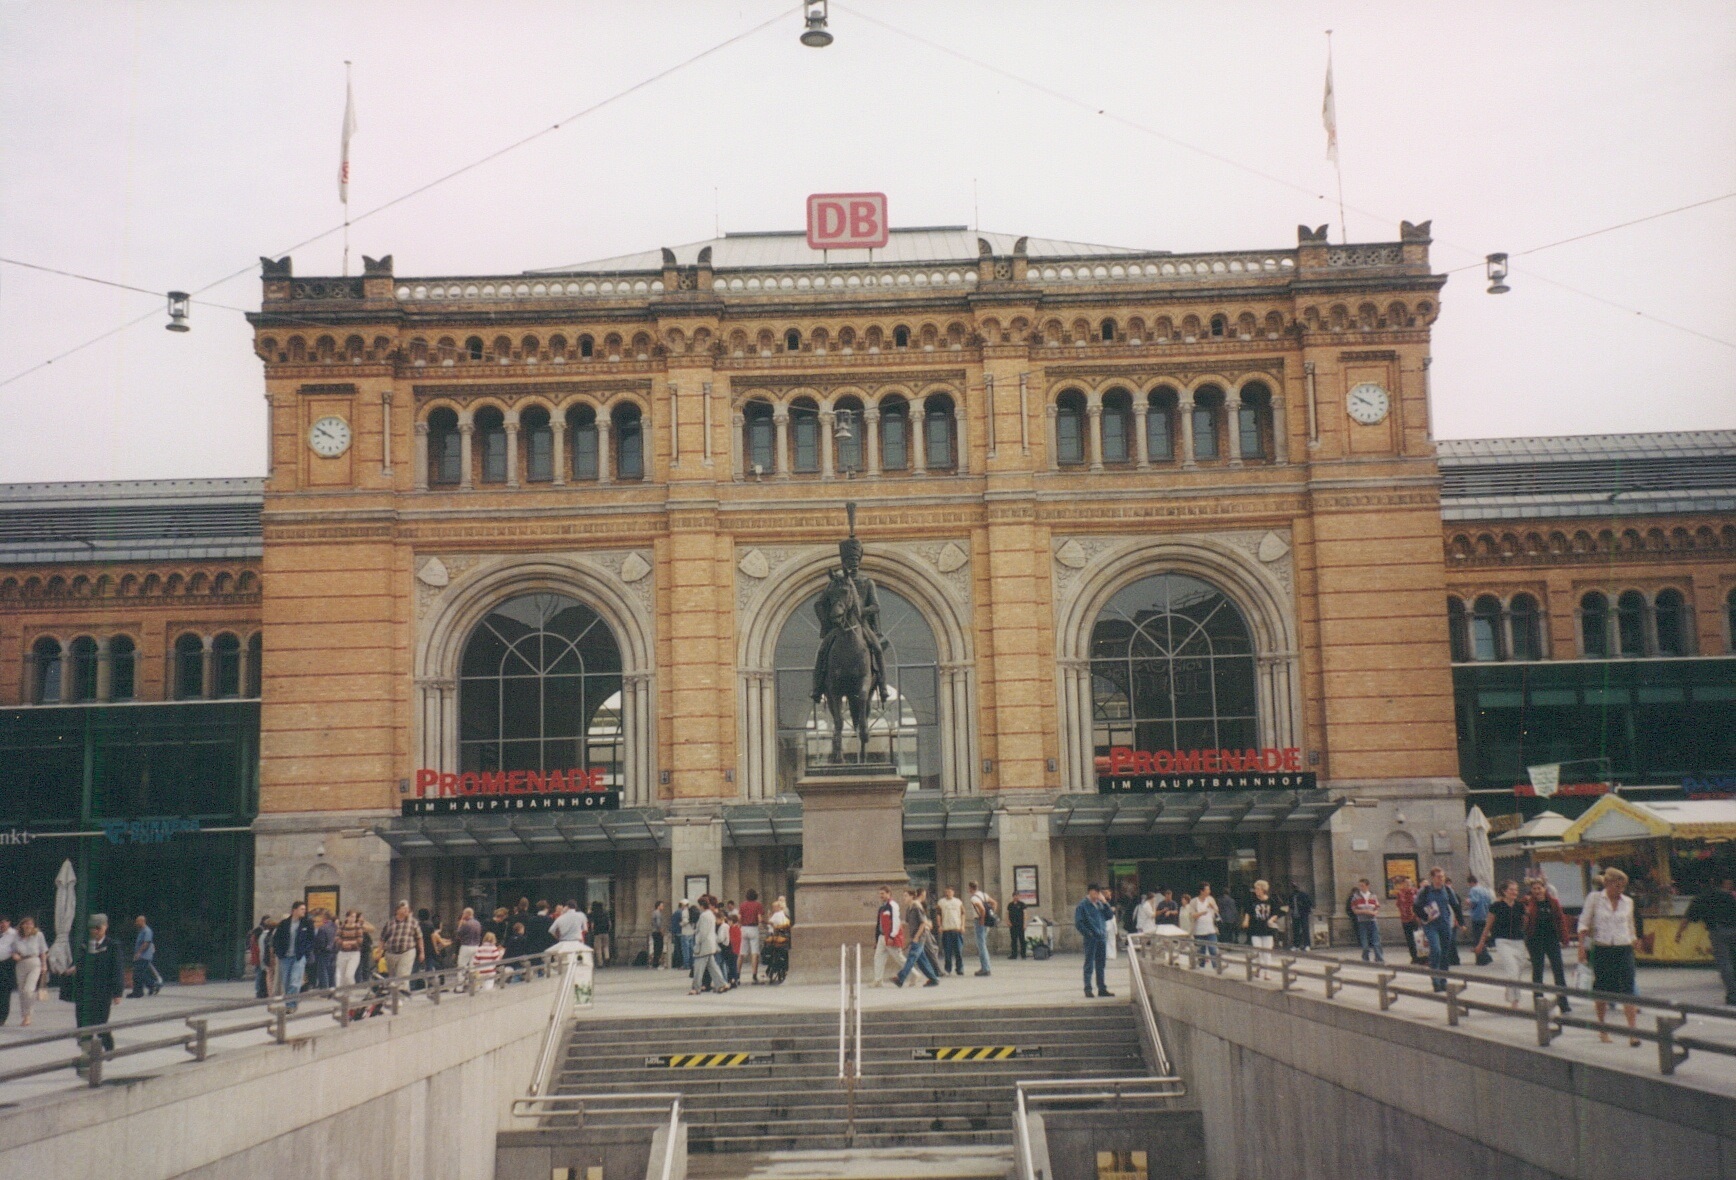 Bahnhof Hannover.